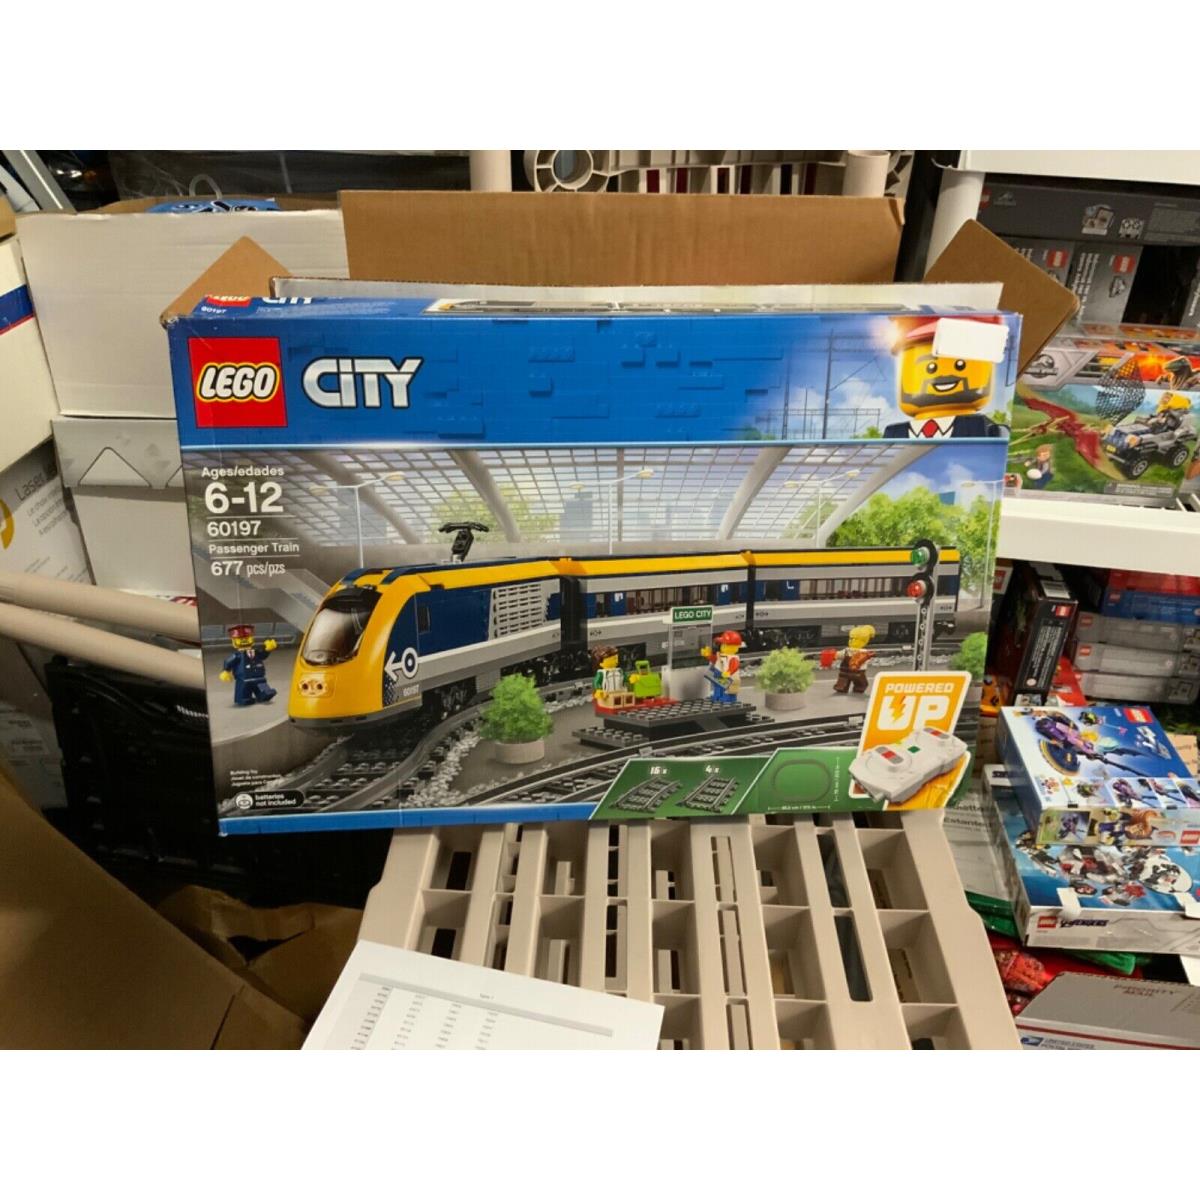 Lego City Passenger Train 60197 Building Kit 677 Pieces in Distress Box